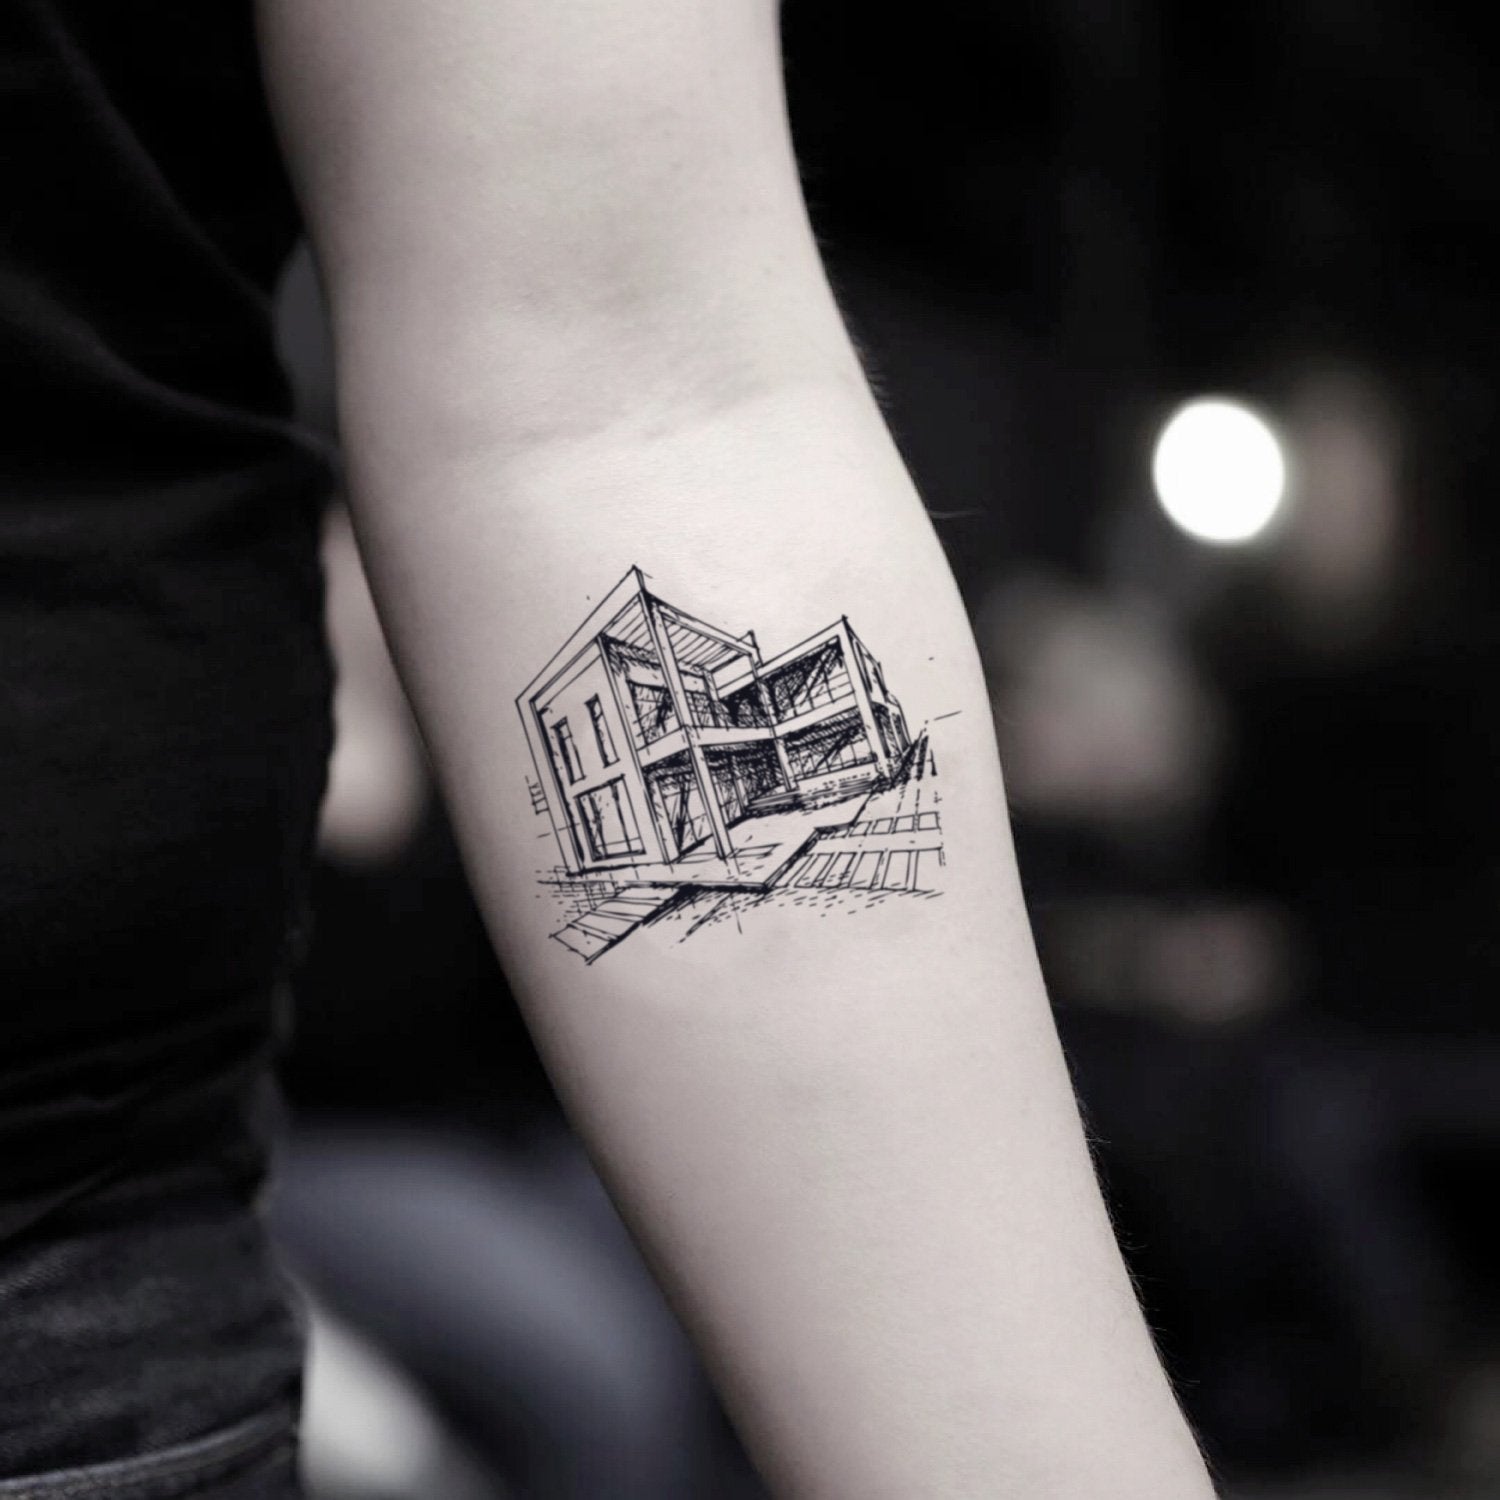 fake small architecture illustrative temporary tattoo sticker design idea on inner arm